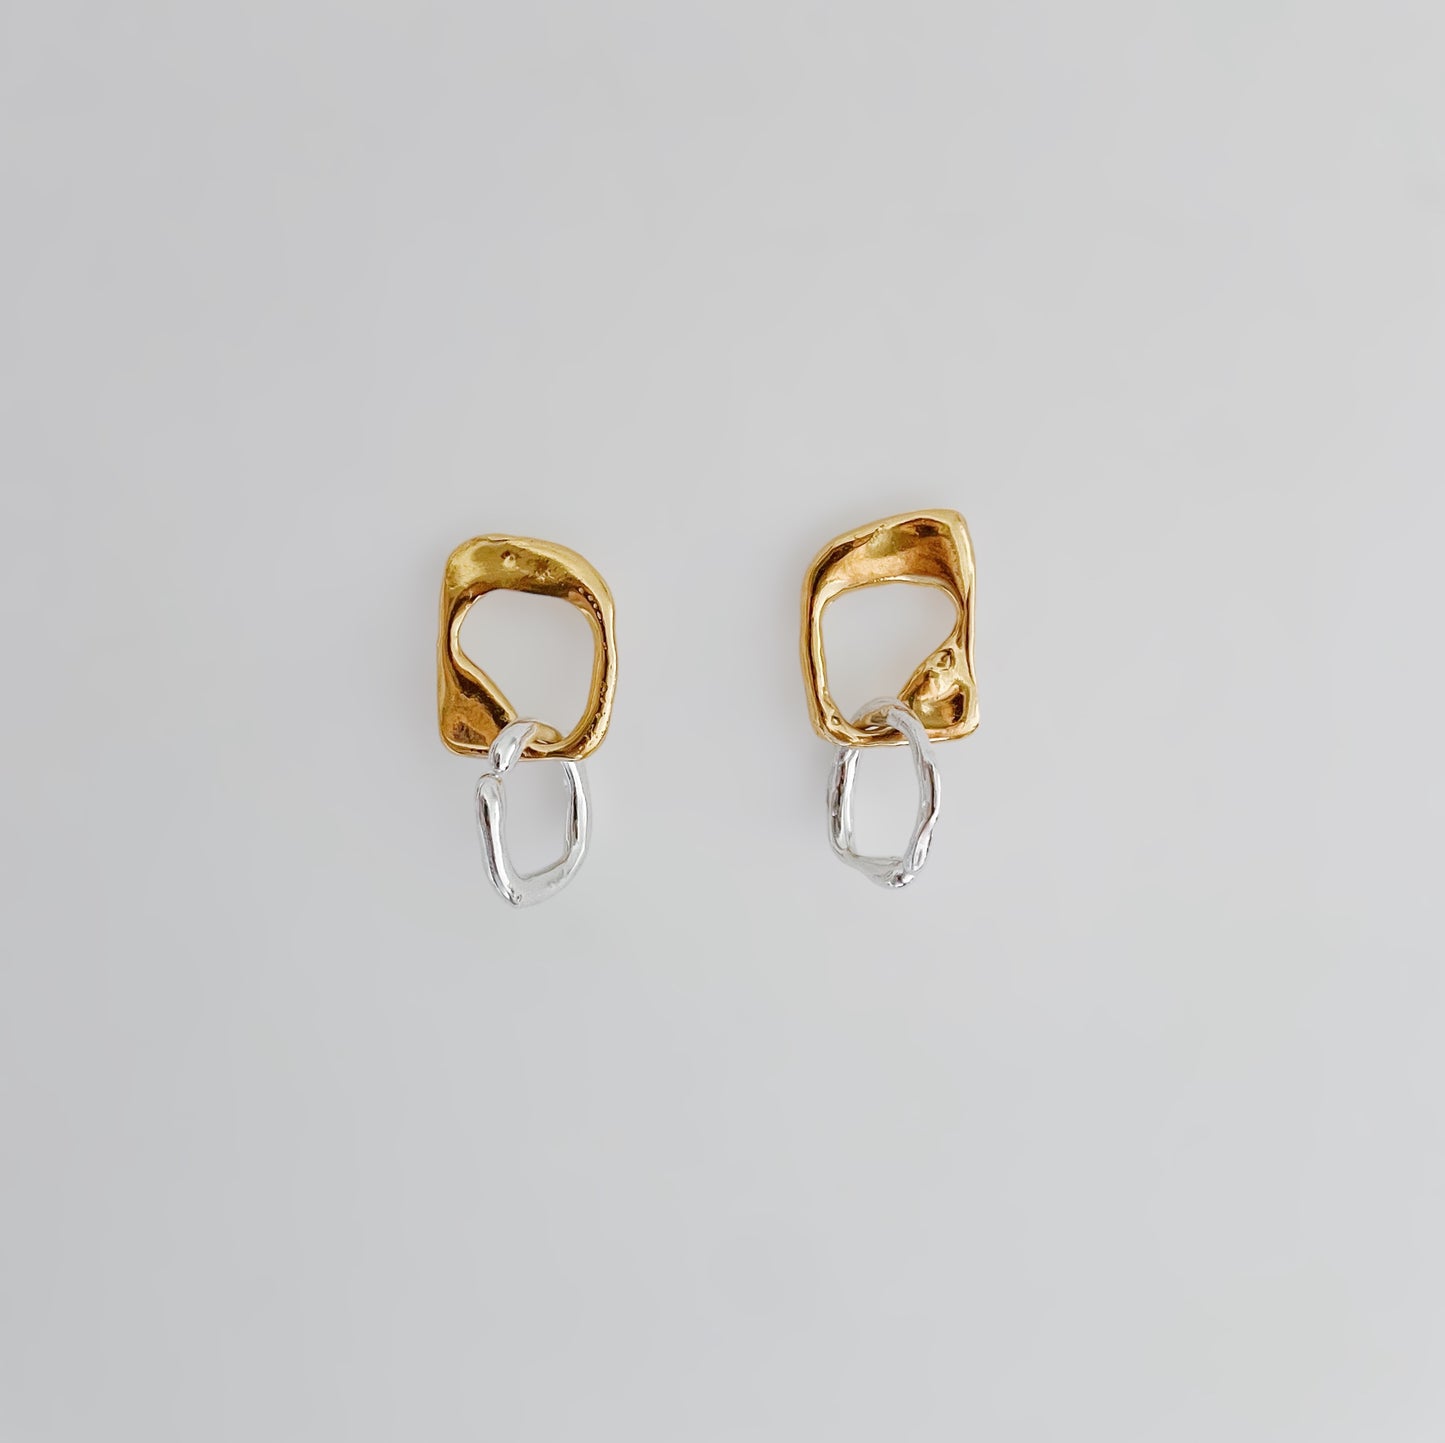 Laurel earrings